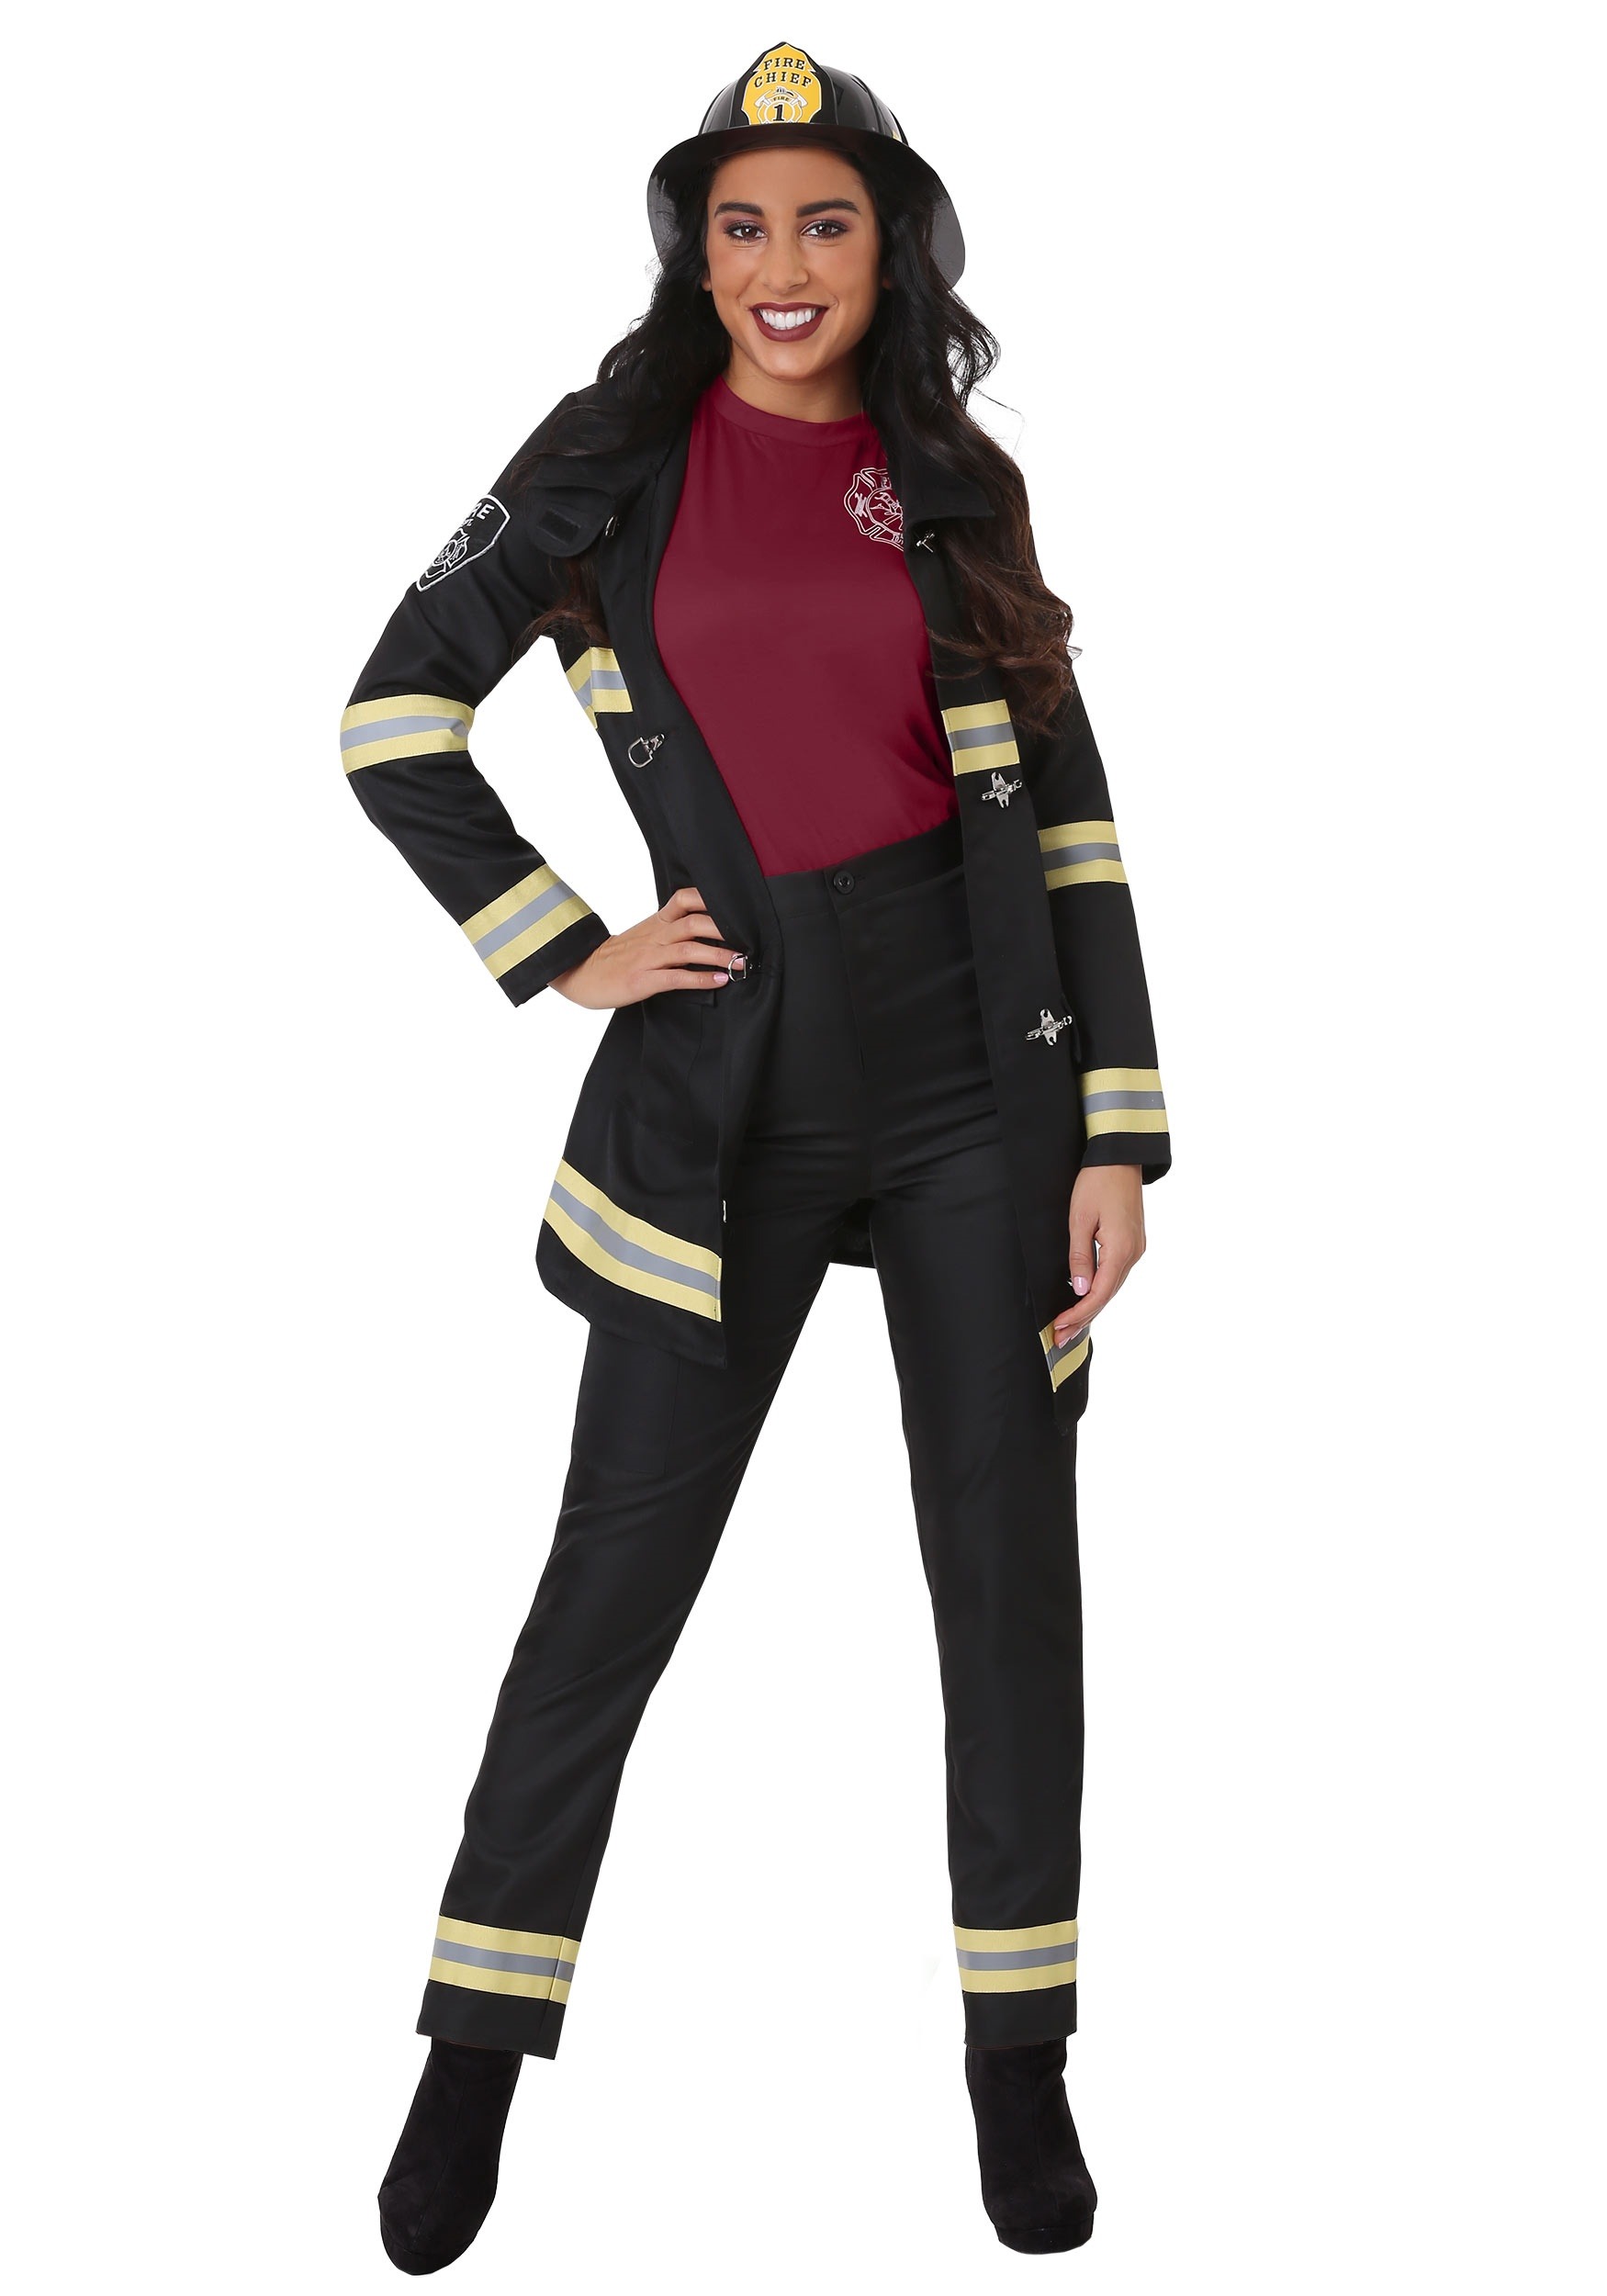 Reflective Firefighter Costume for Women